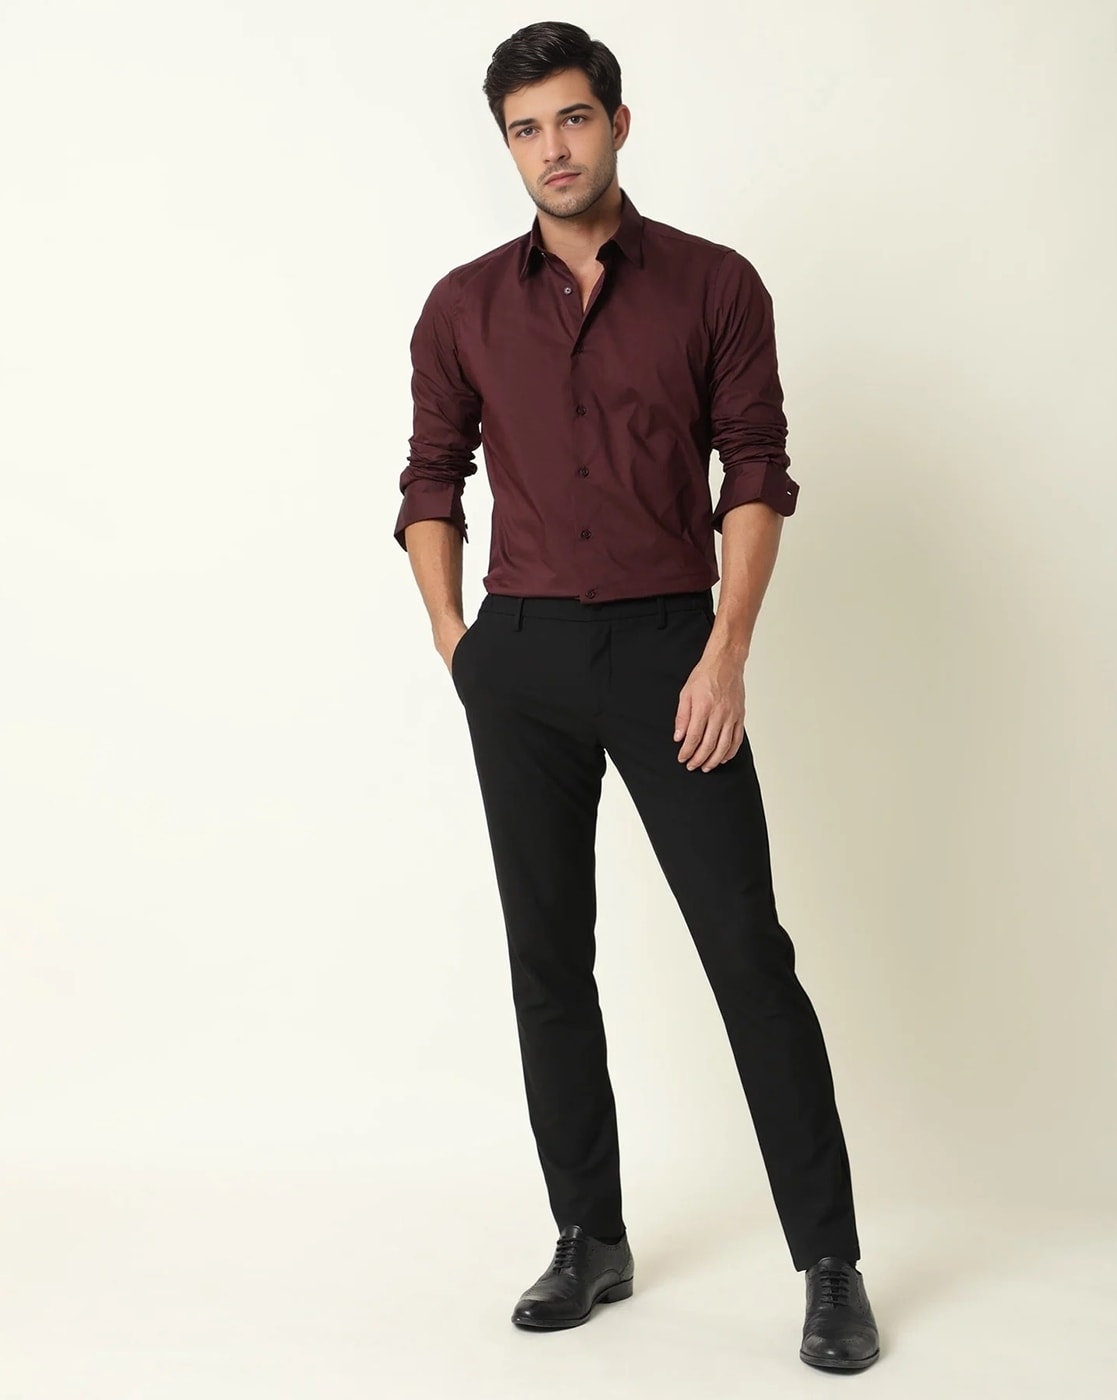 Men's solid Cotton Blend Spread Collar Maroon Formal Long Sleeves Shirt ||  Men's maroon Shirt ||